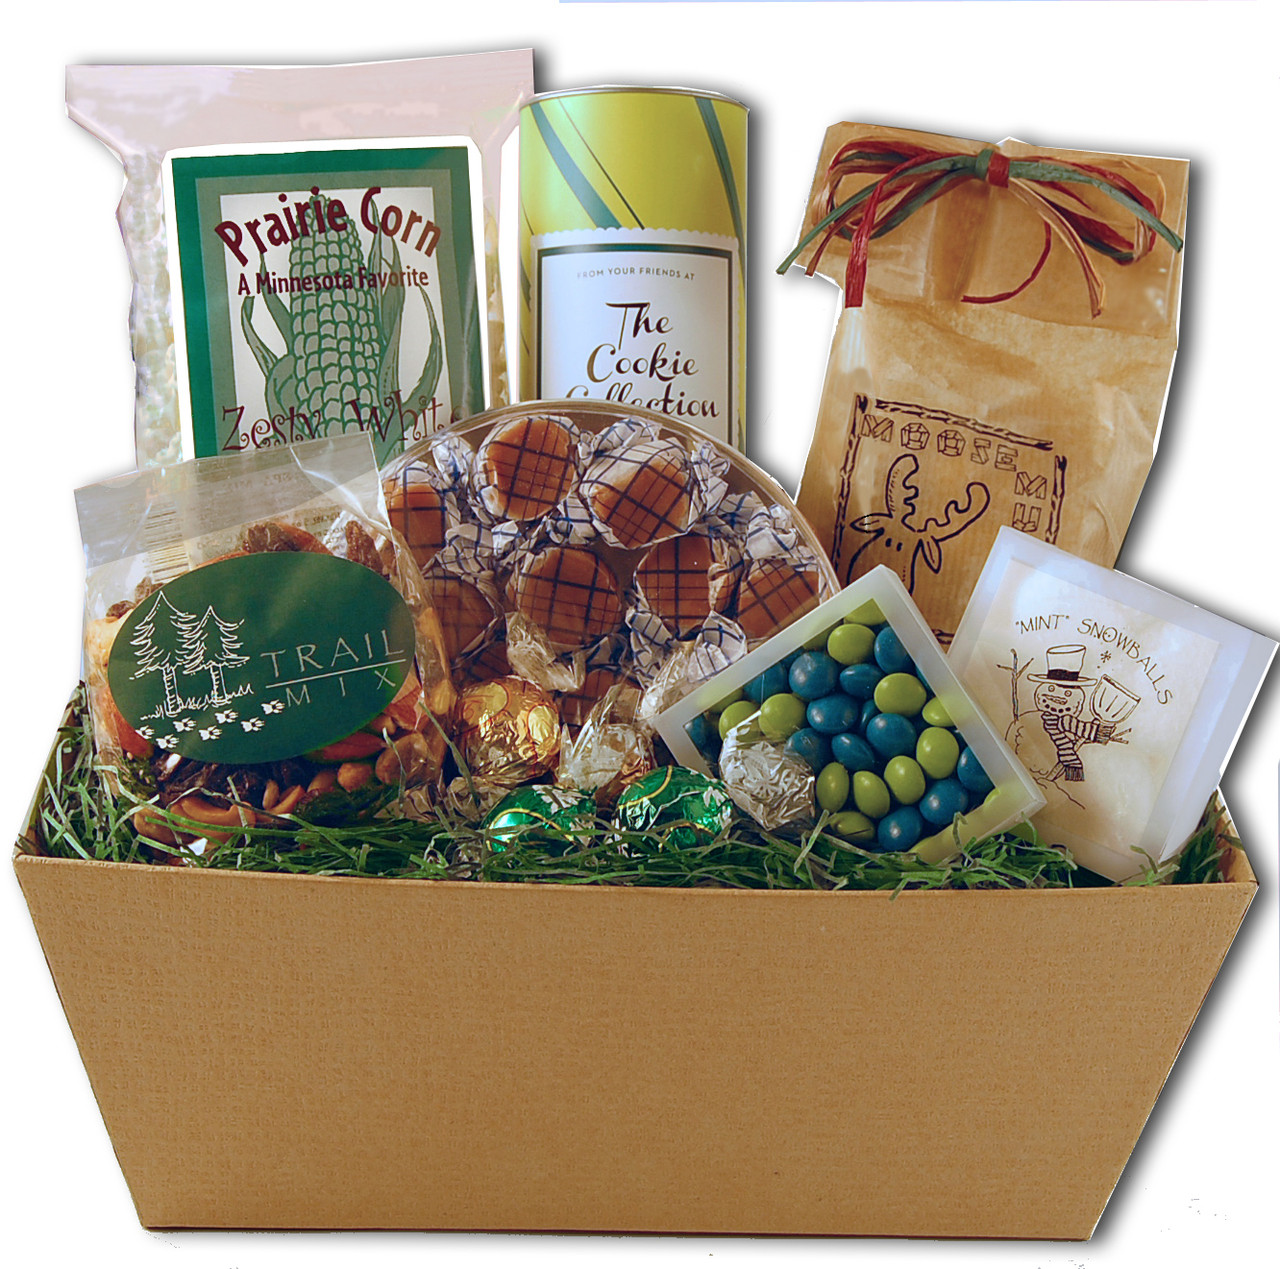 Gift basket arrangement with Minnesota wild rice, prairie corn, moose munch, snowball almonds, birch bark, and trail mix